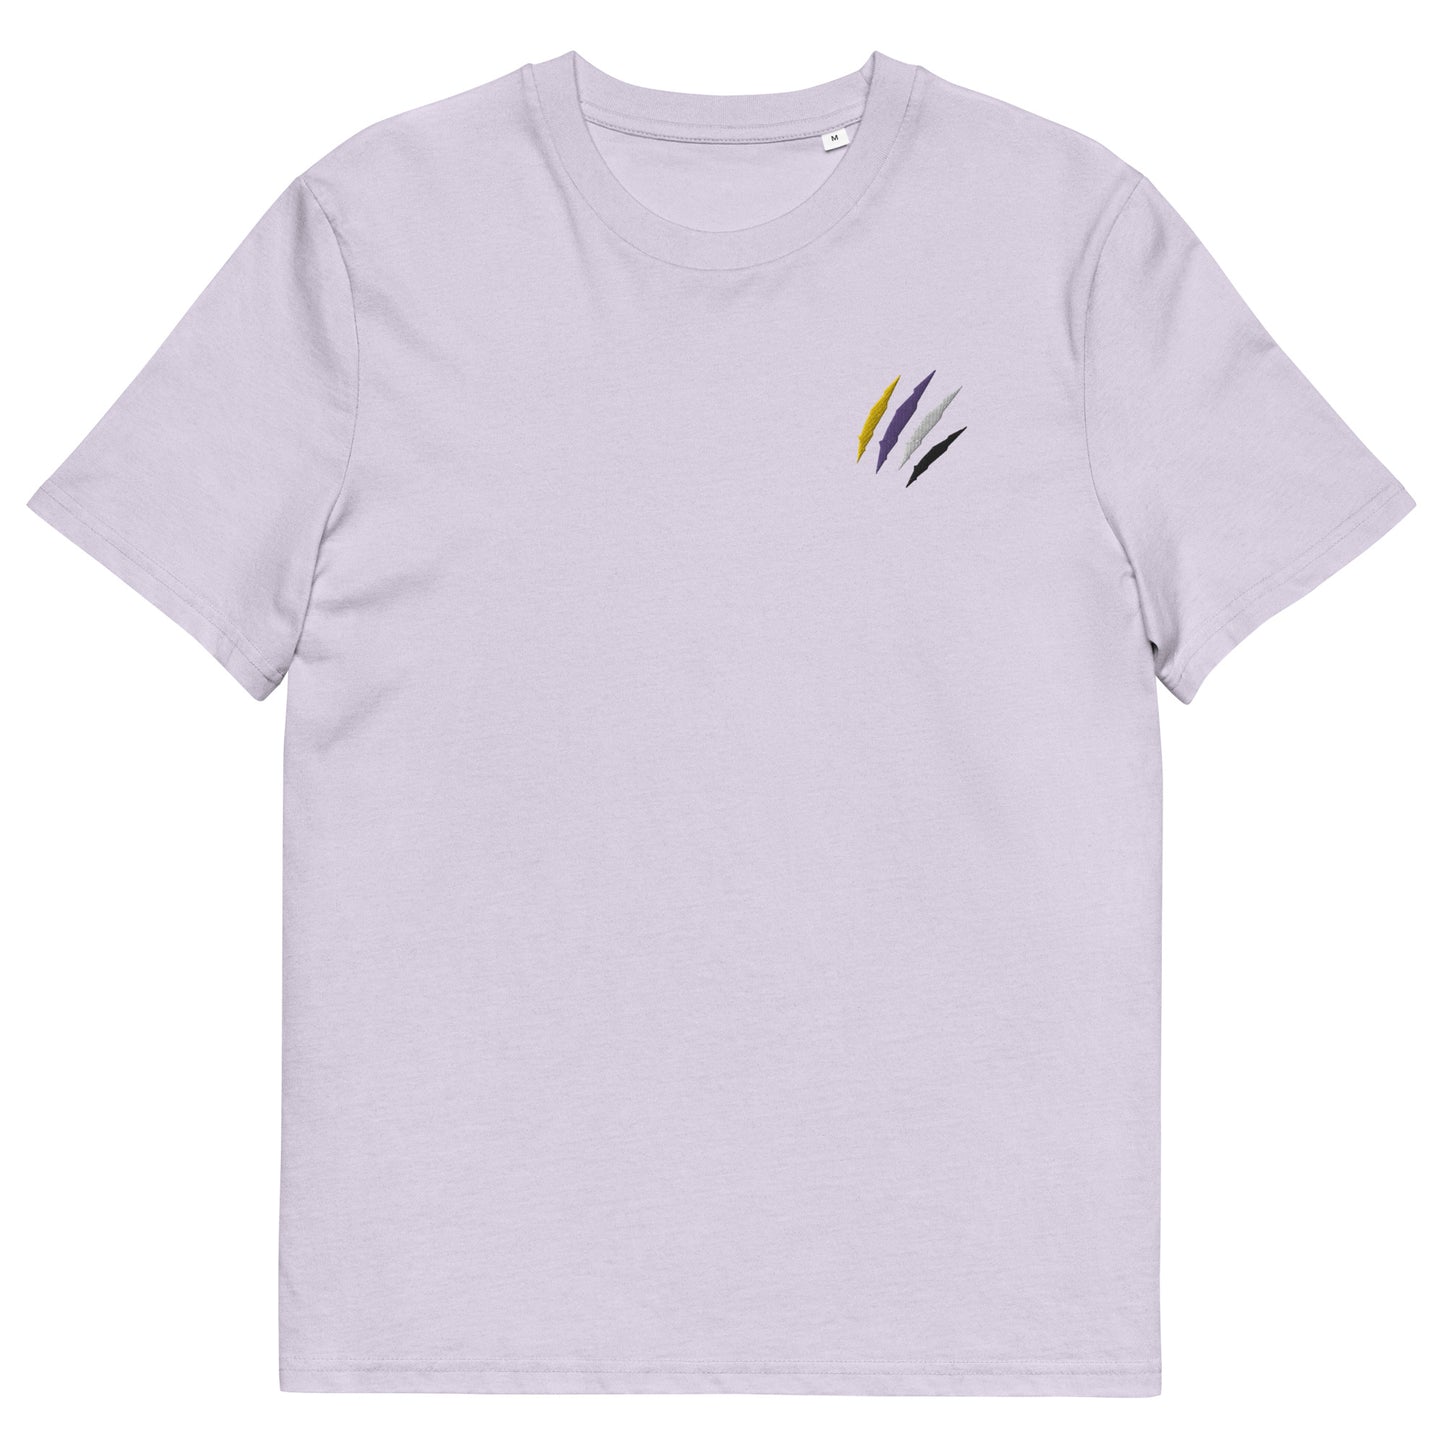 T-shirt en coton biologique : marque non binaire